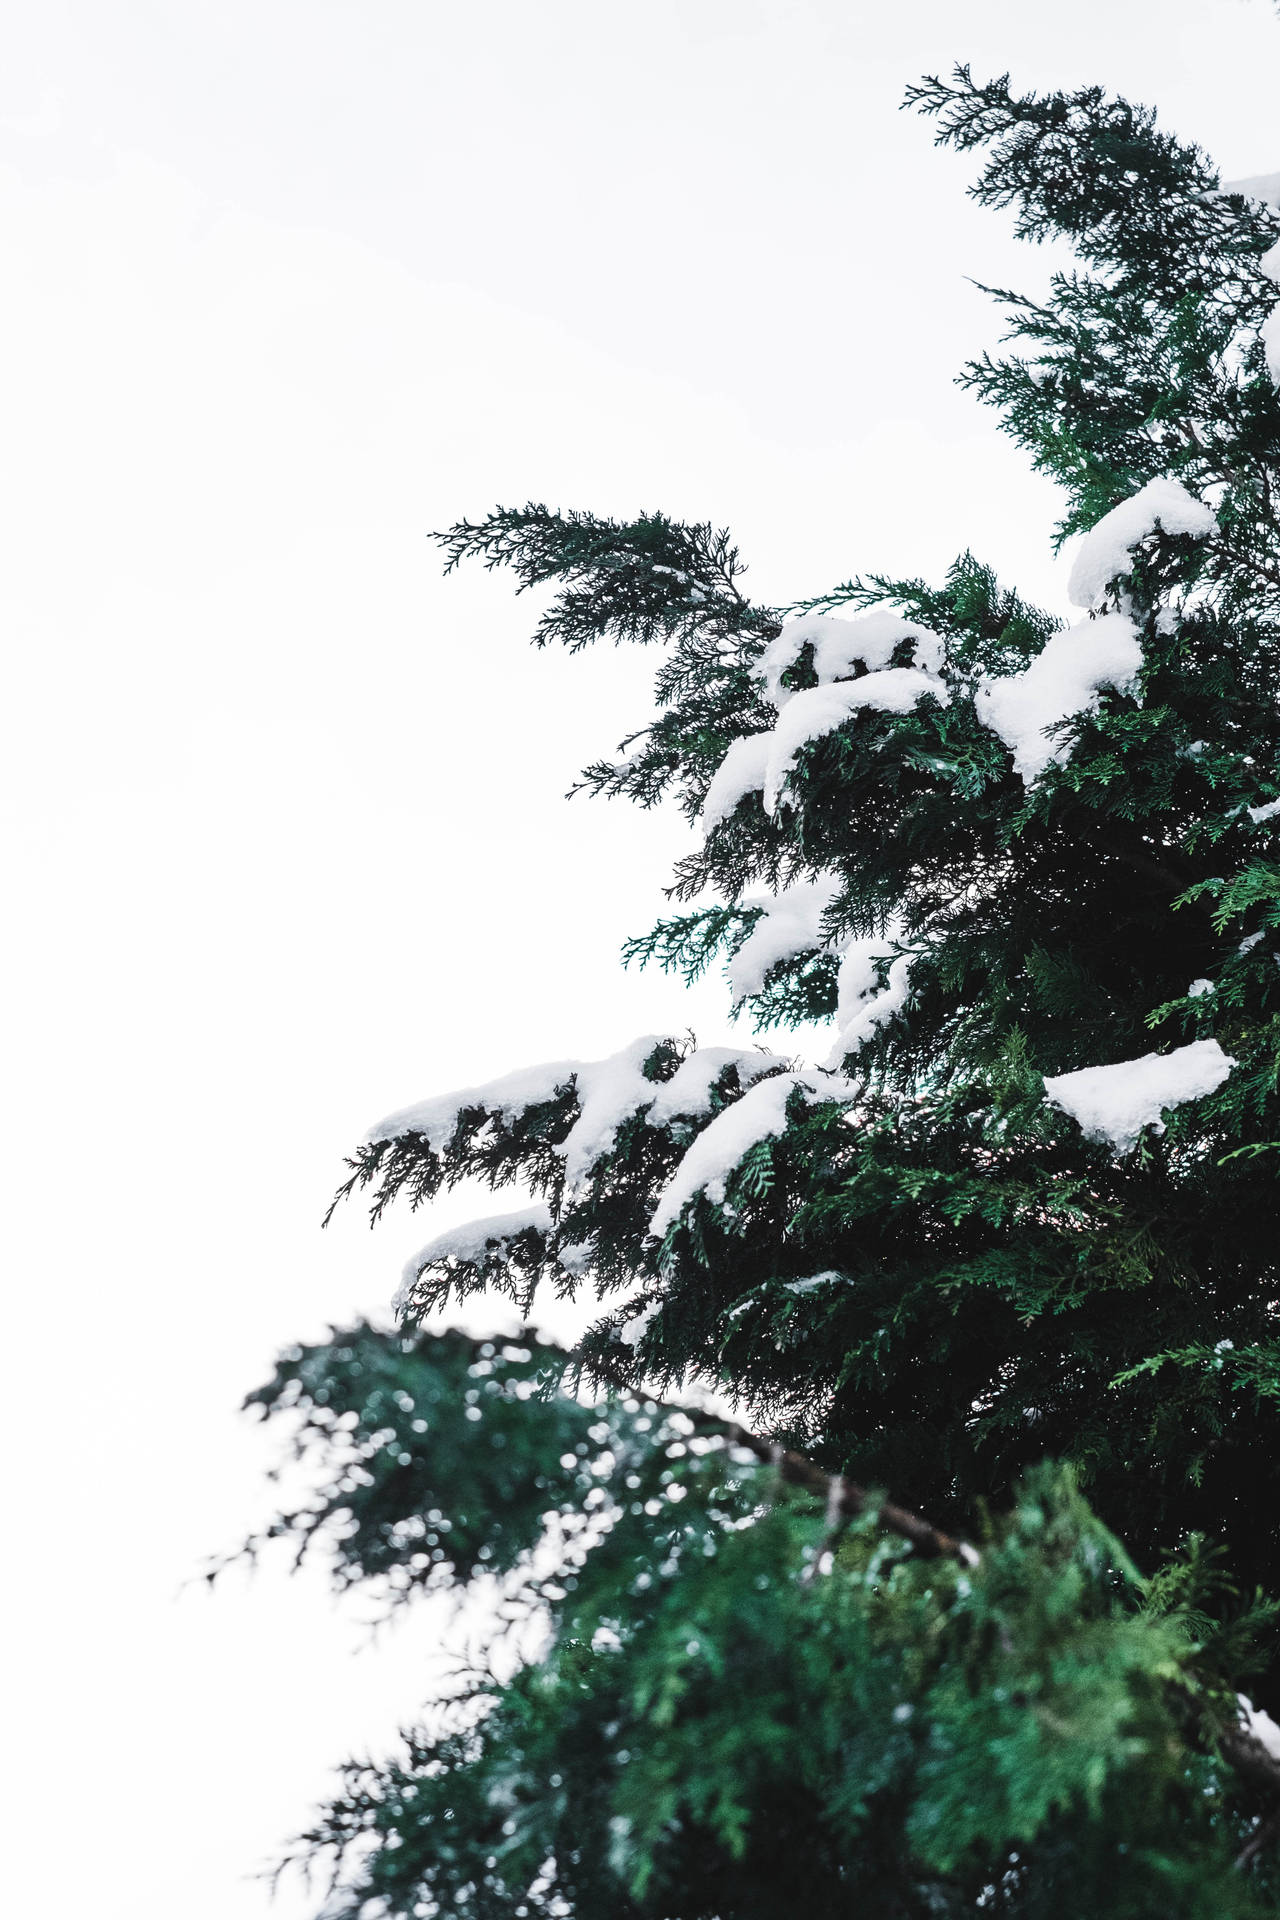 Aesthetic Christmas Tree With Snow